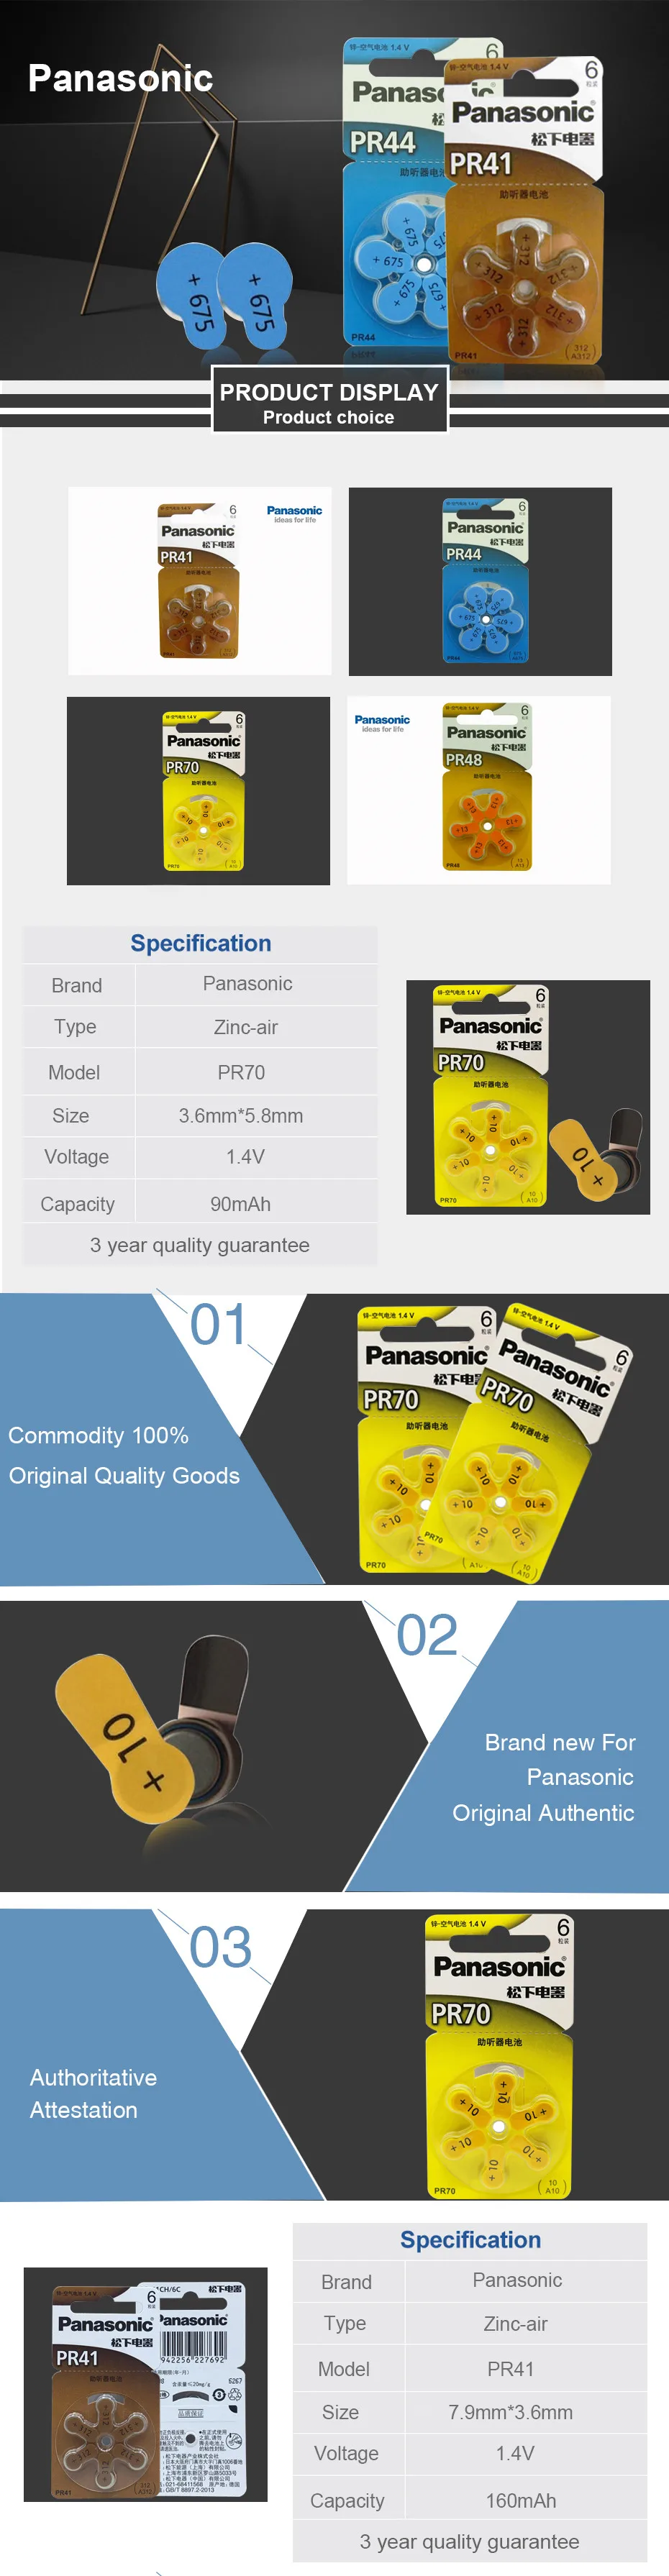 12 шт. настоящие батареи слухового аппарата Panasonic PR70 5,8 мм* 3,6 мм 10 A10 глухие батарейки таблеточного типа аудиофон